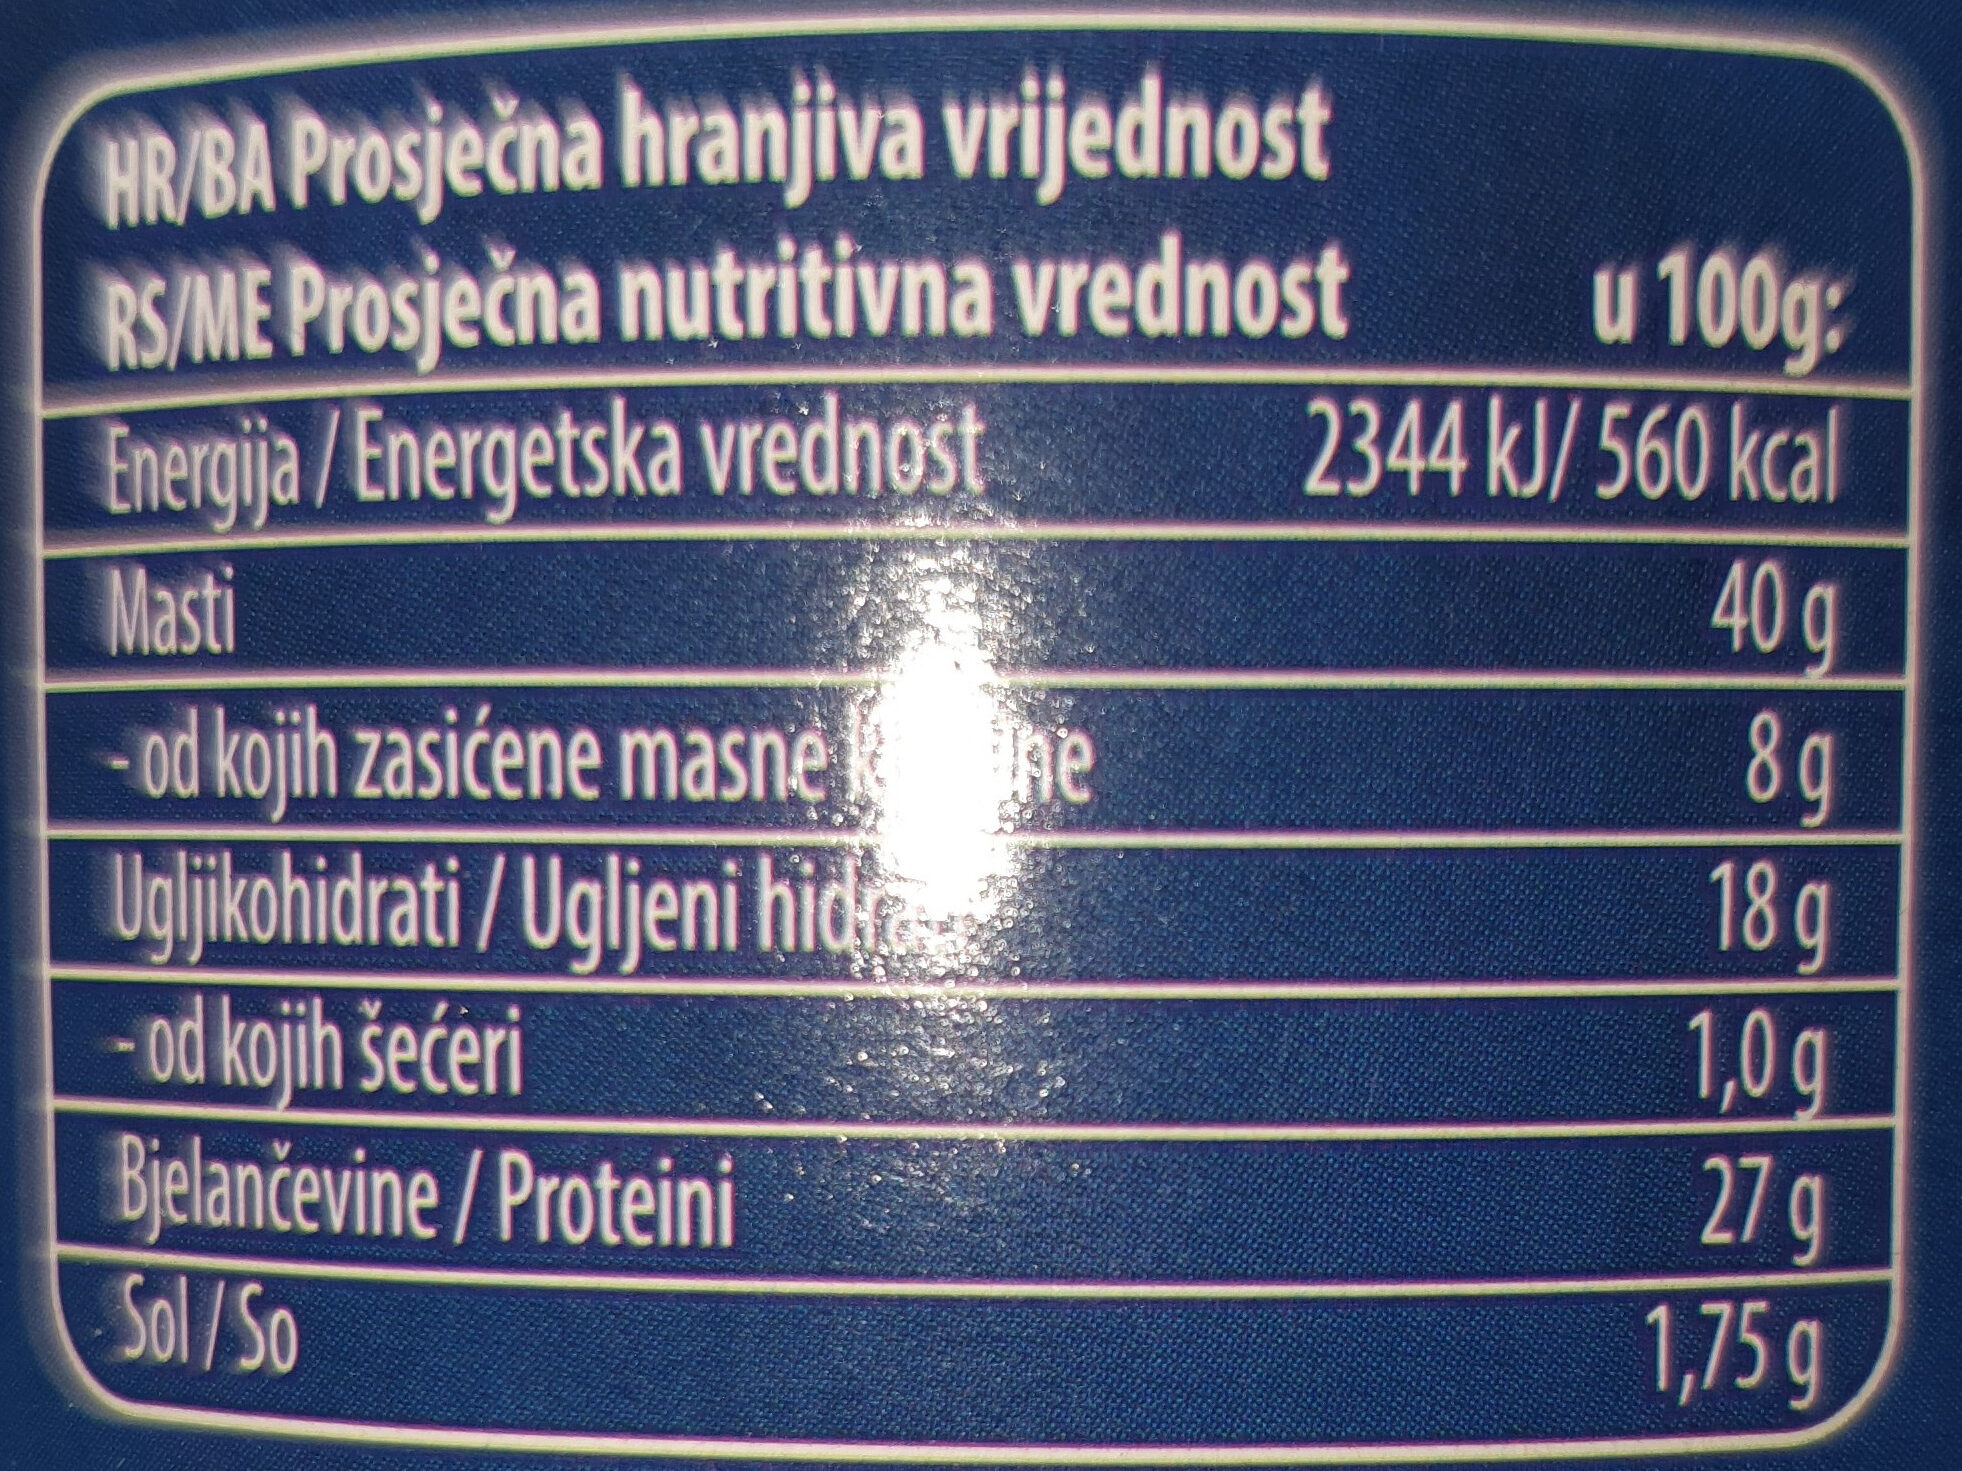 Kikiriki slani, prženi - Nutrition facts - hr